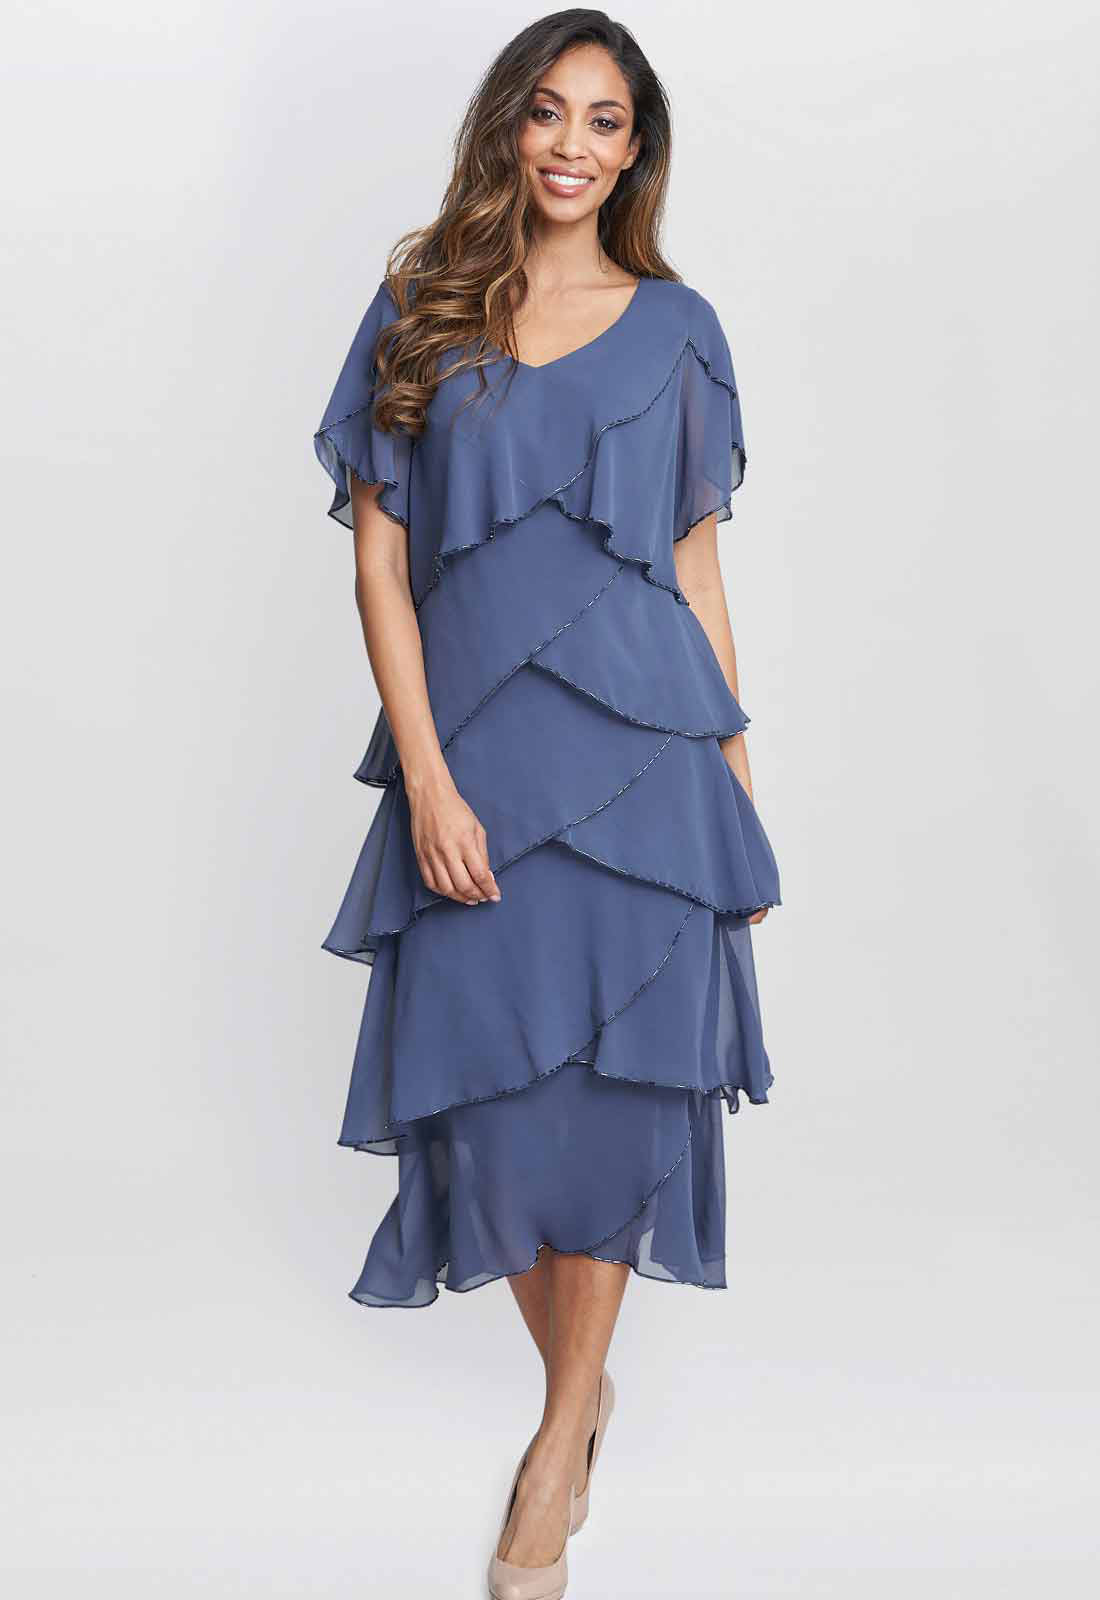 Gina Bacconi Blue Fleur Midi Dress